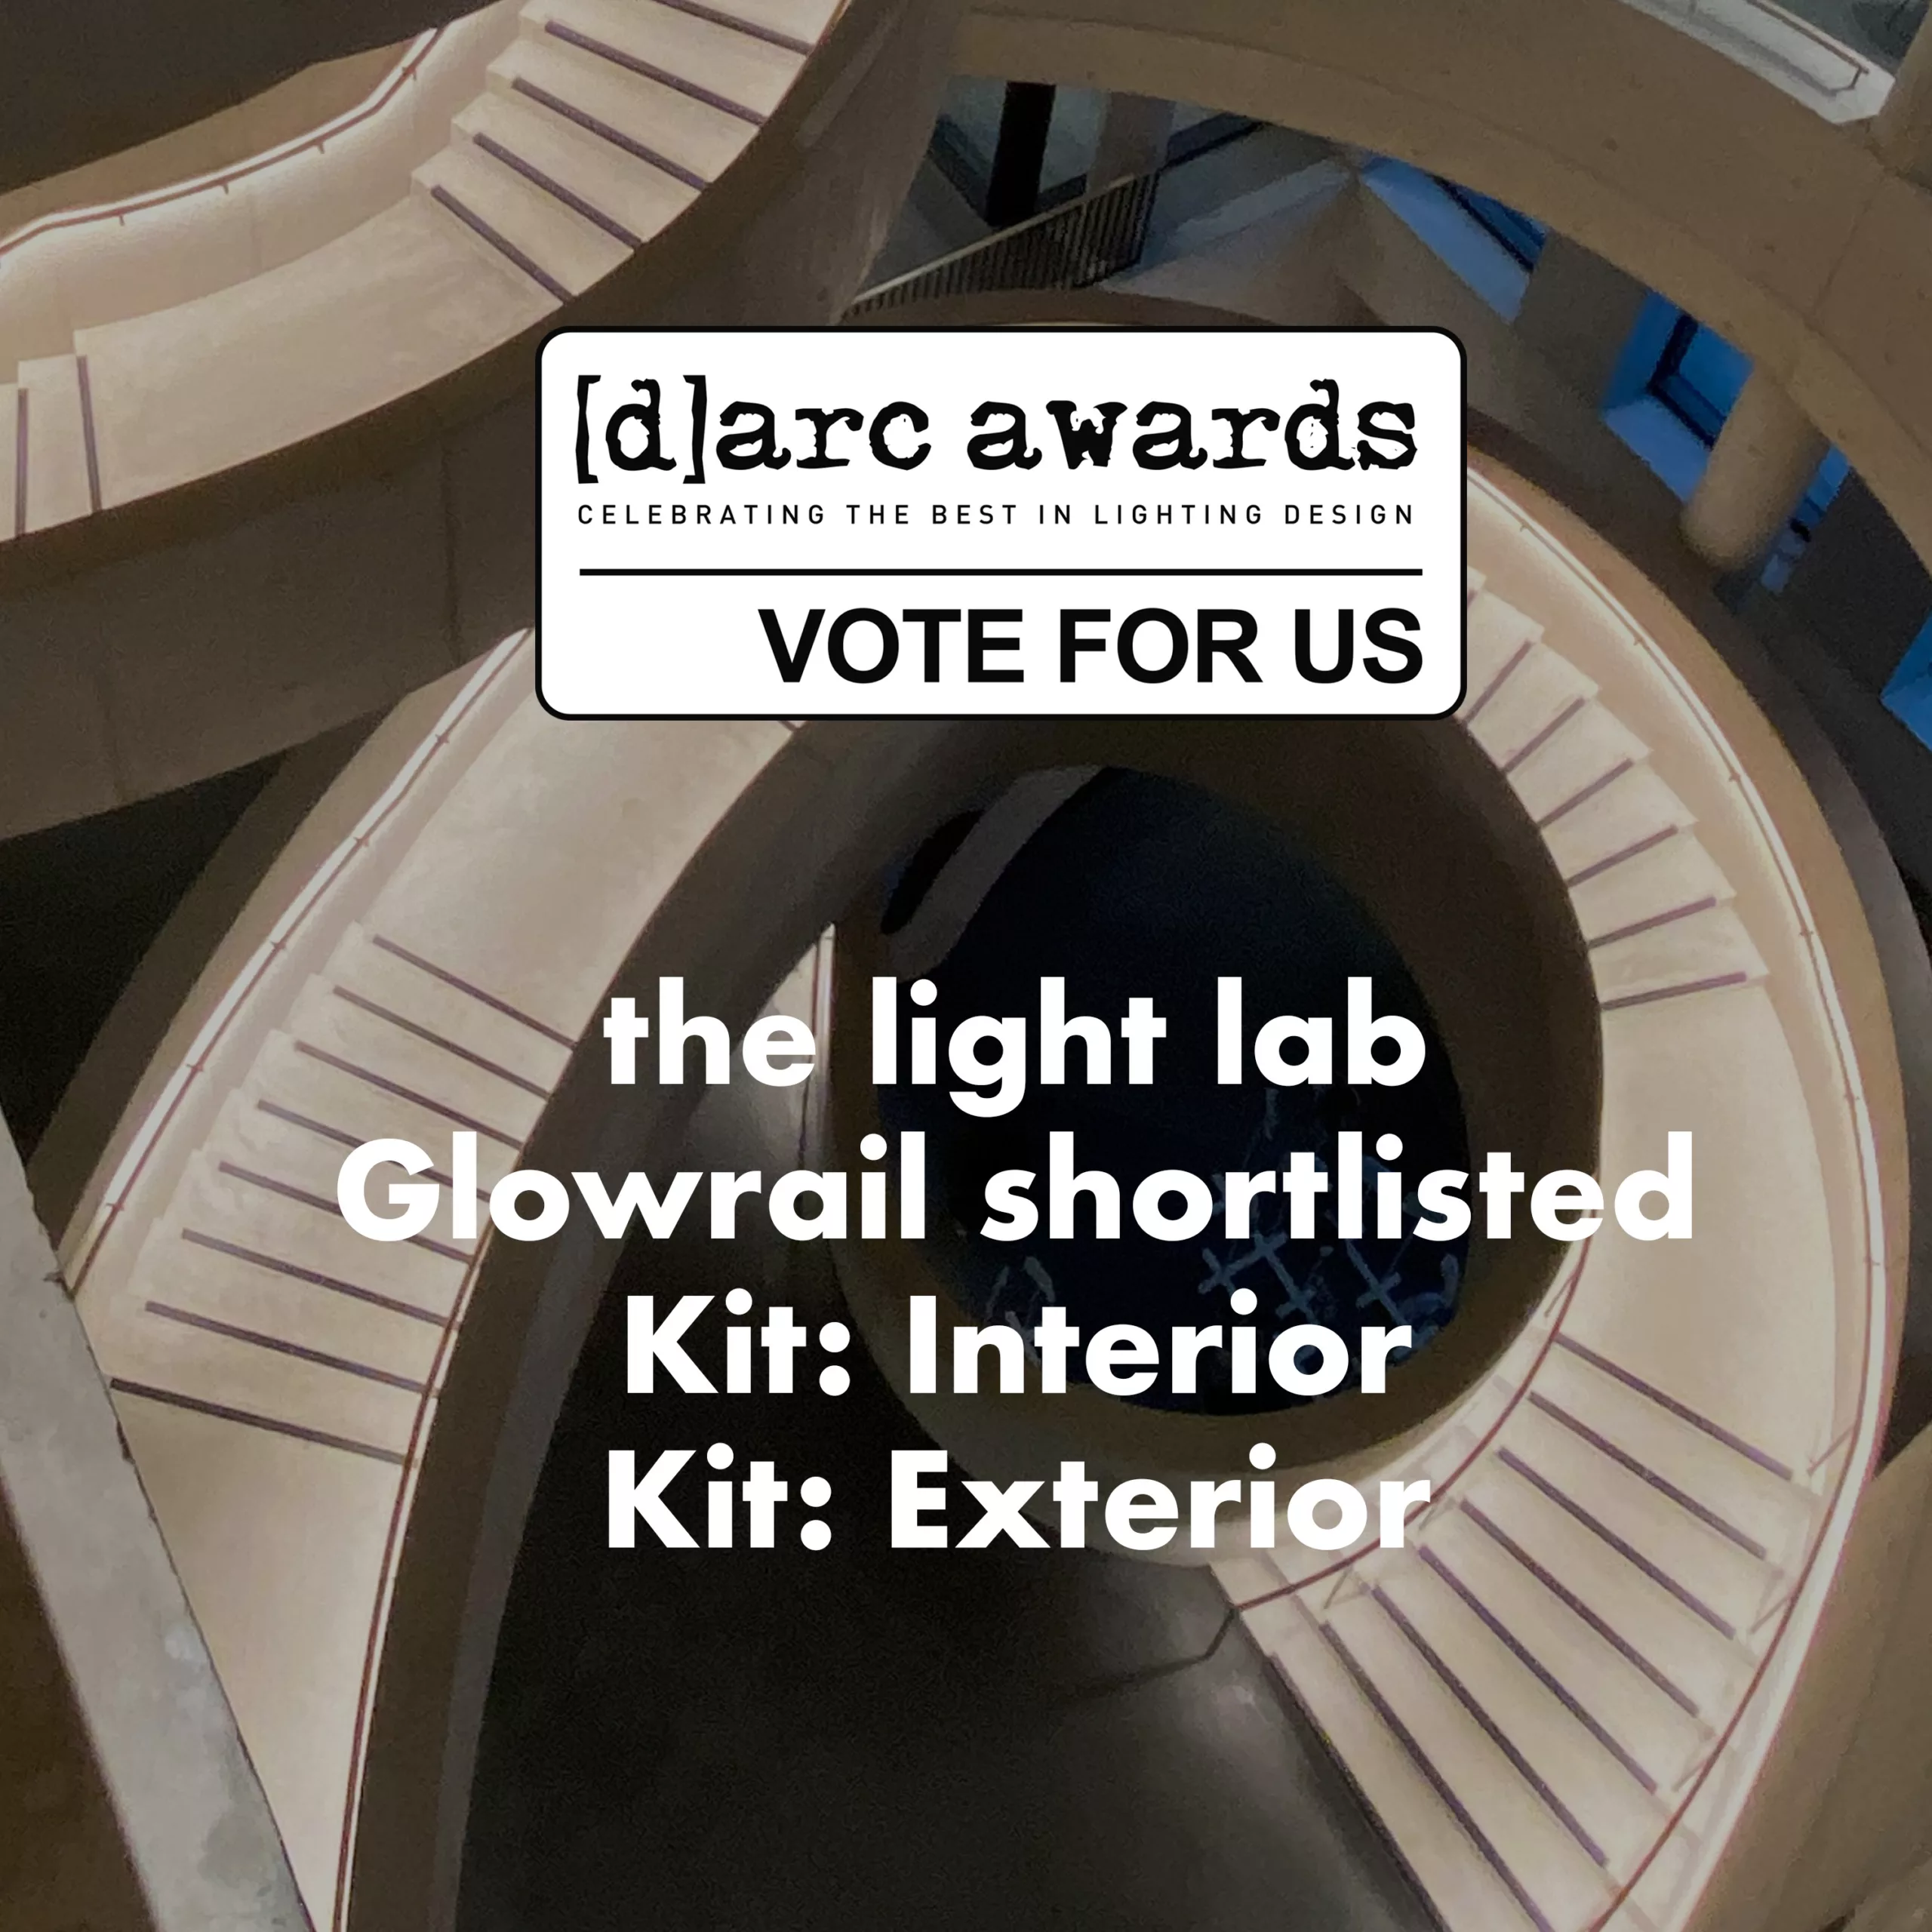 glowrail LED handrail - the light lab - DARC awards - vote